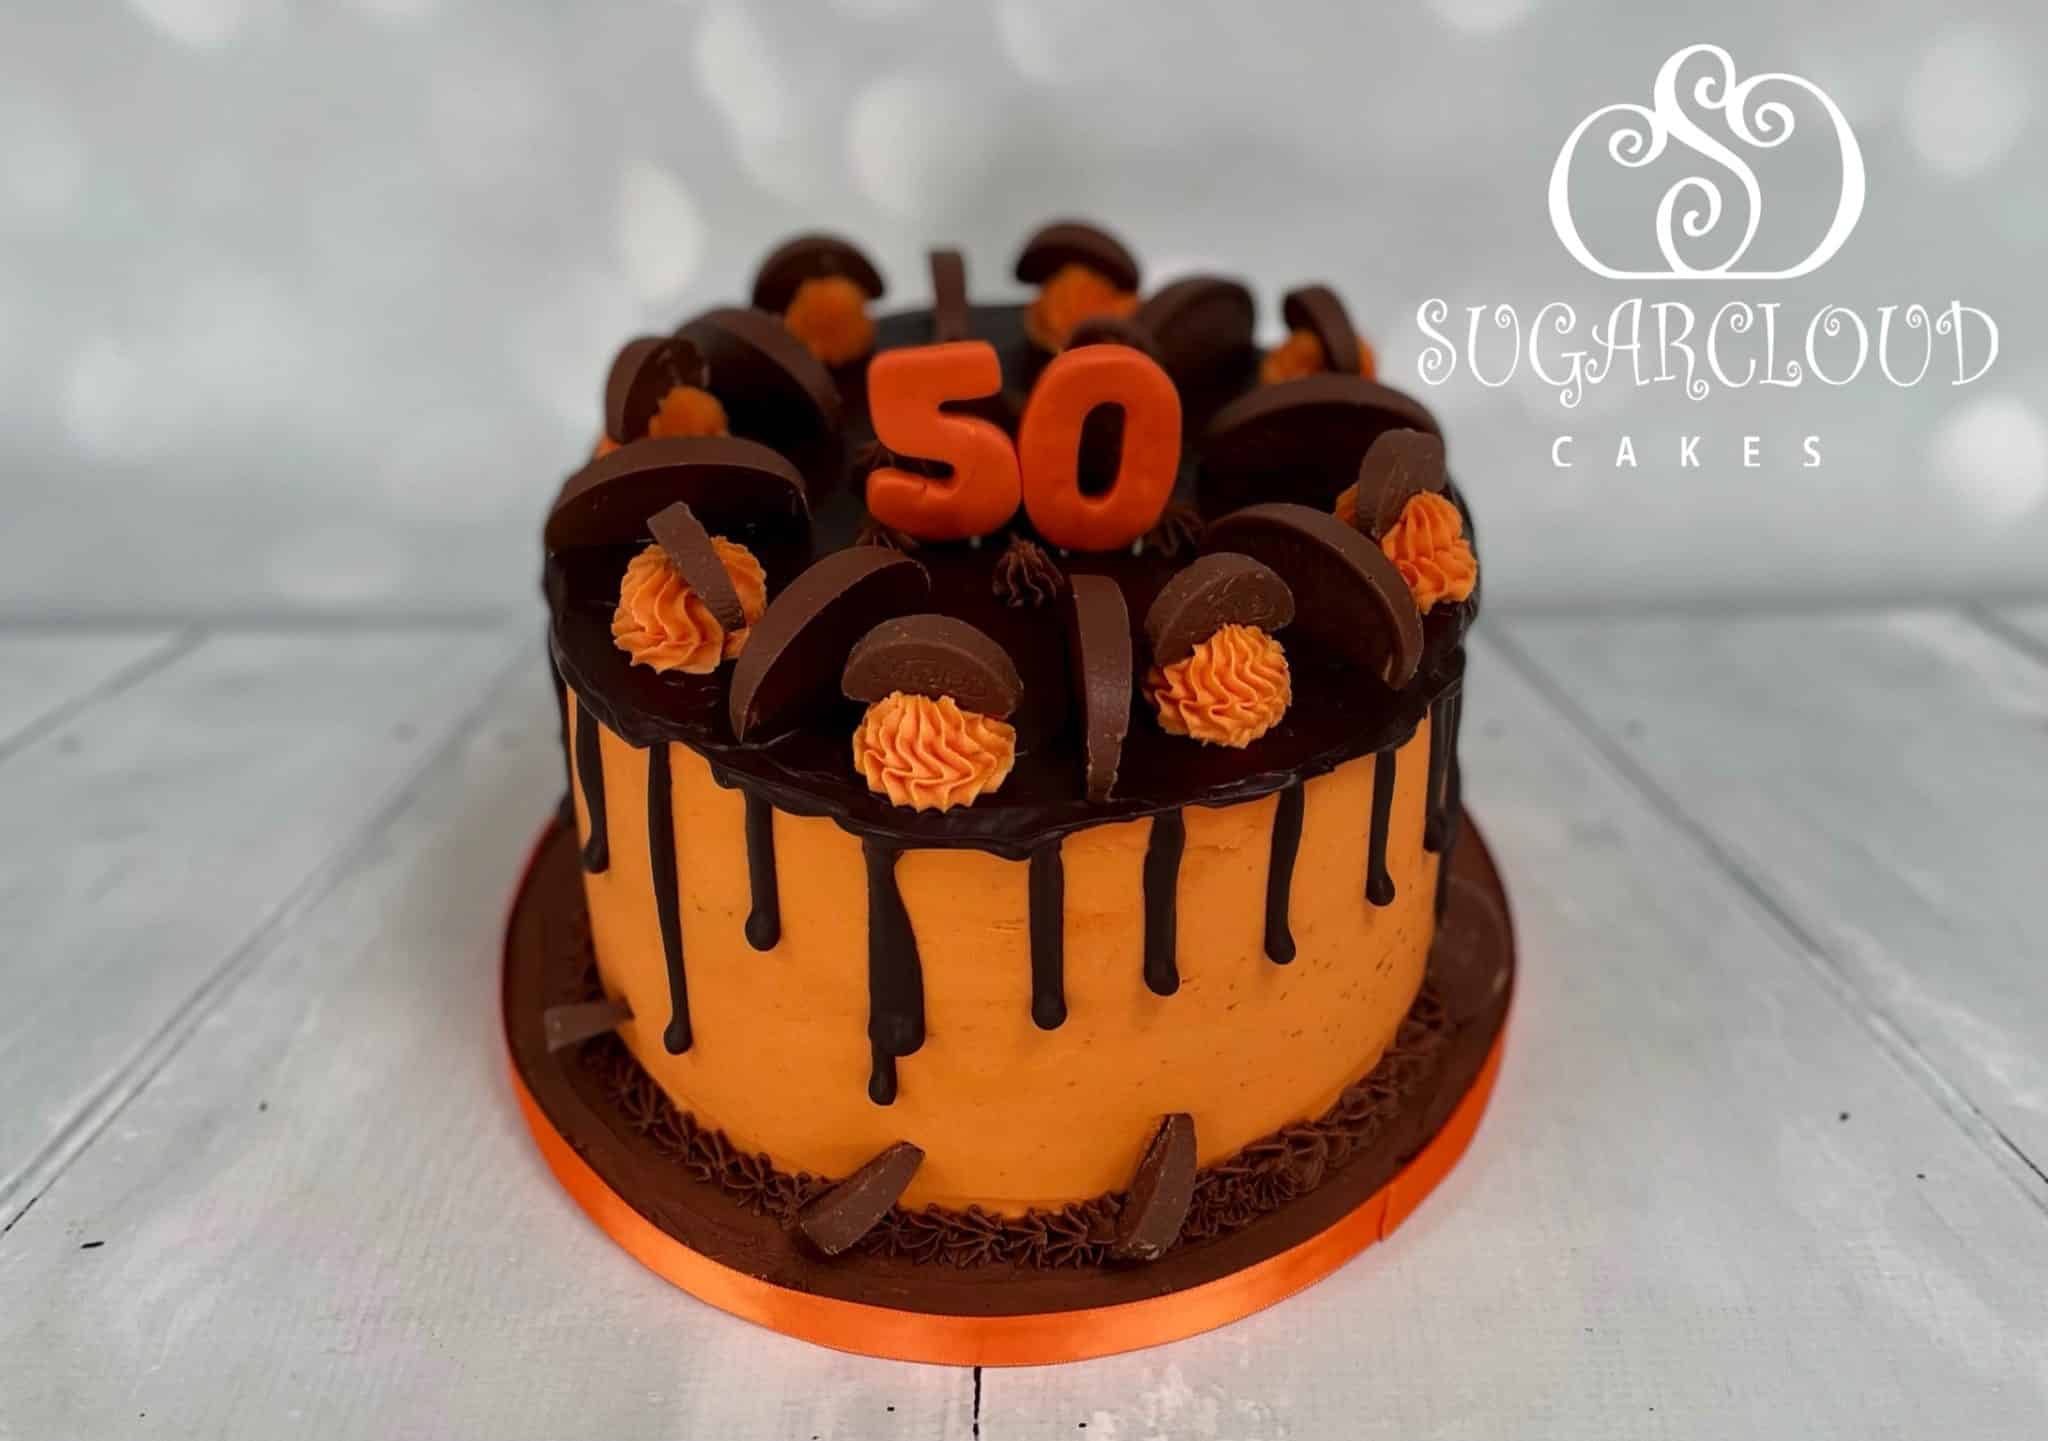 A Chocolate Orange 50th Birthday Cake, Nantwich